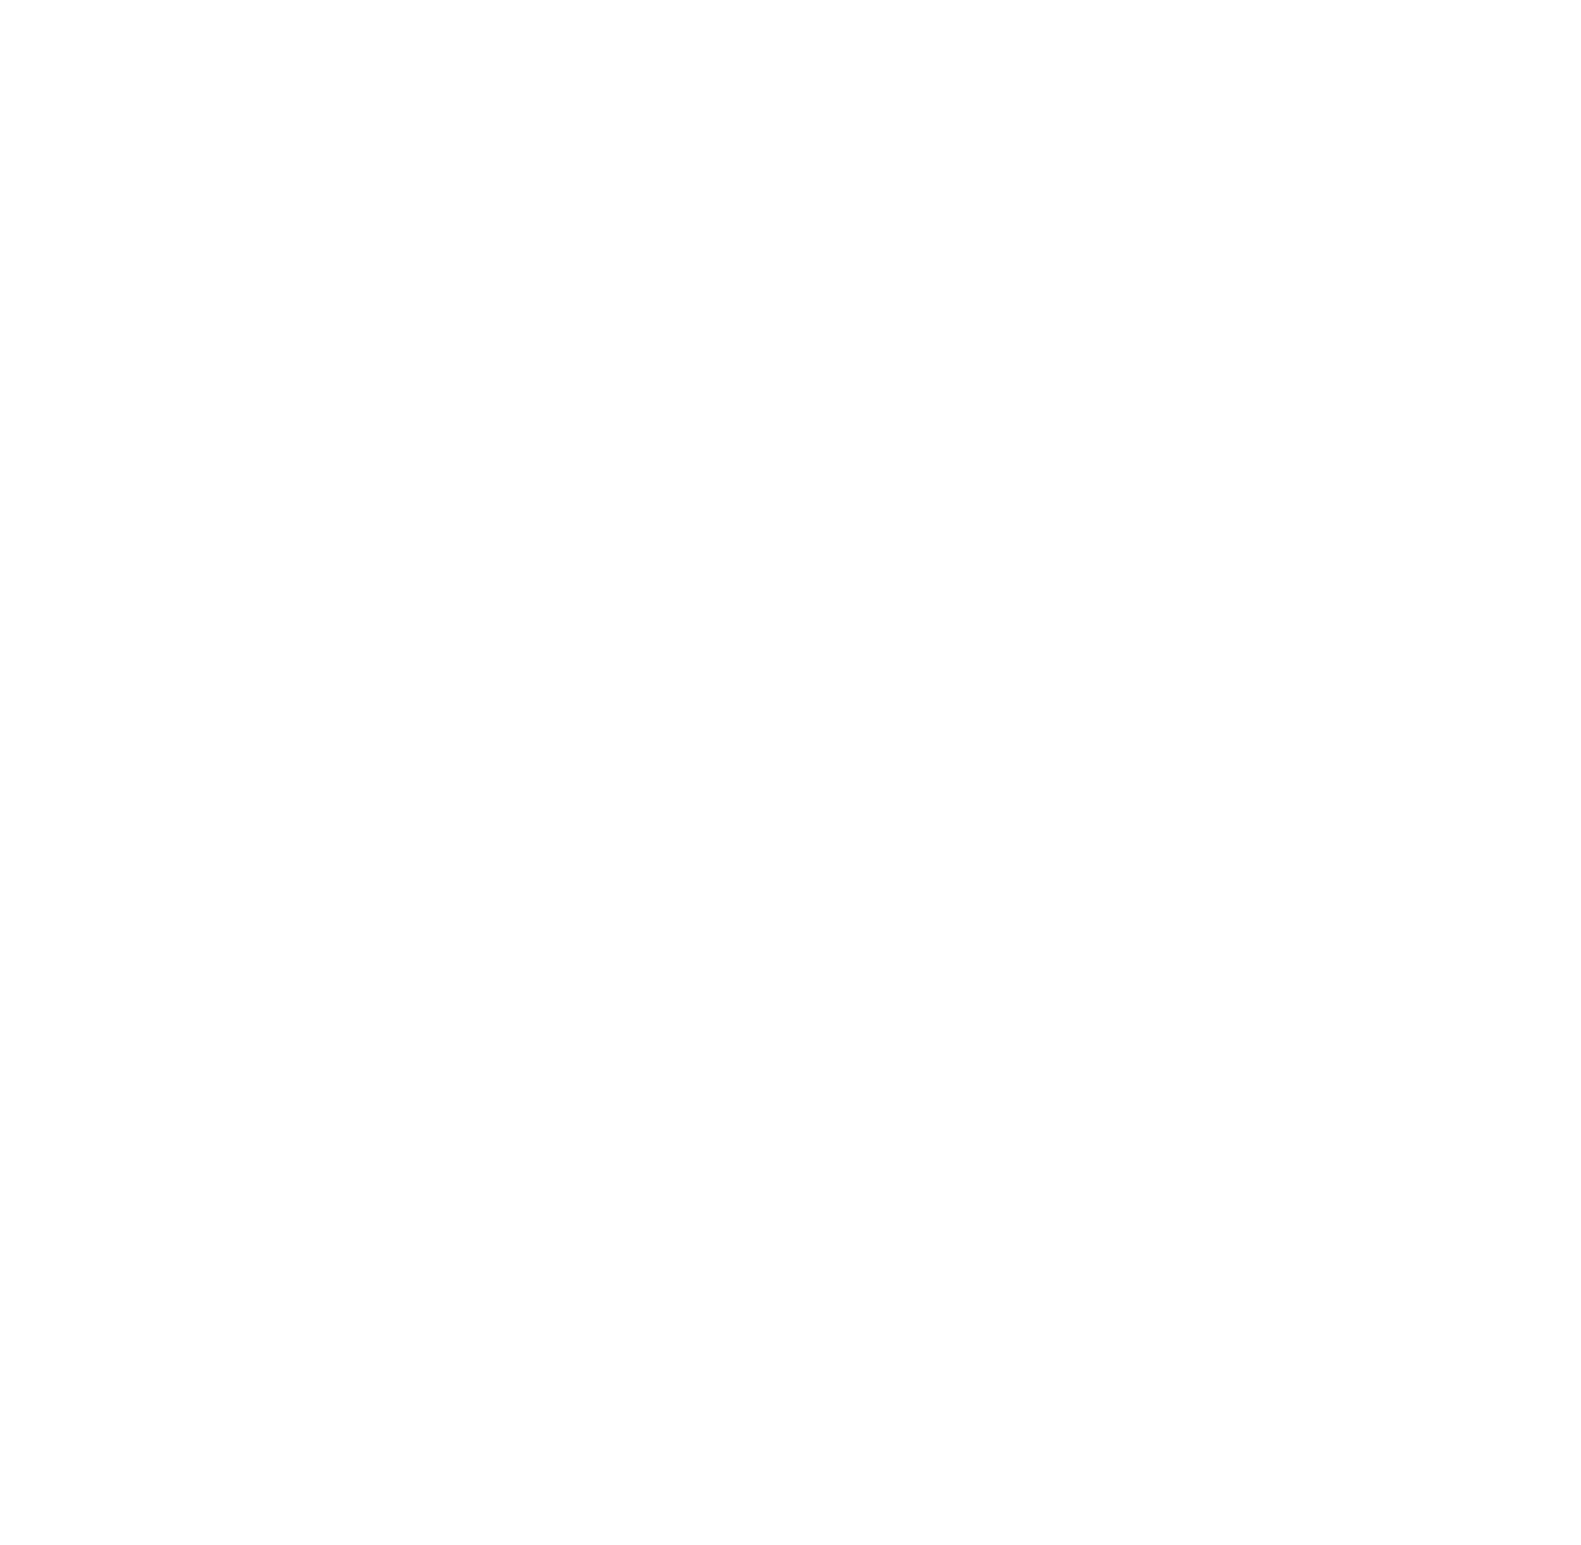 Ooredoo Qatar logo for dark backgrounds (transparent PNG)